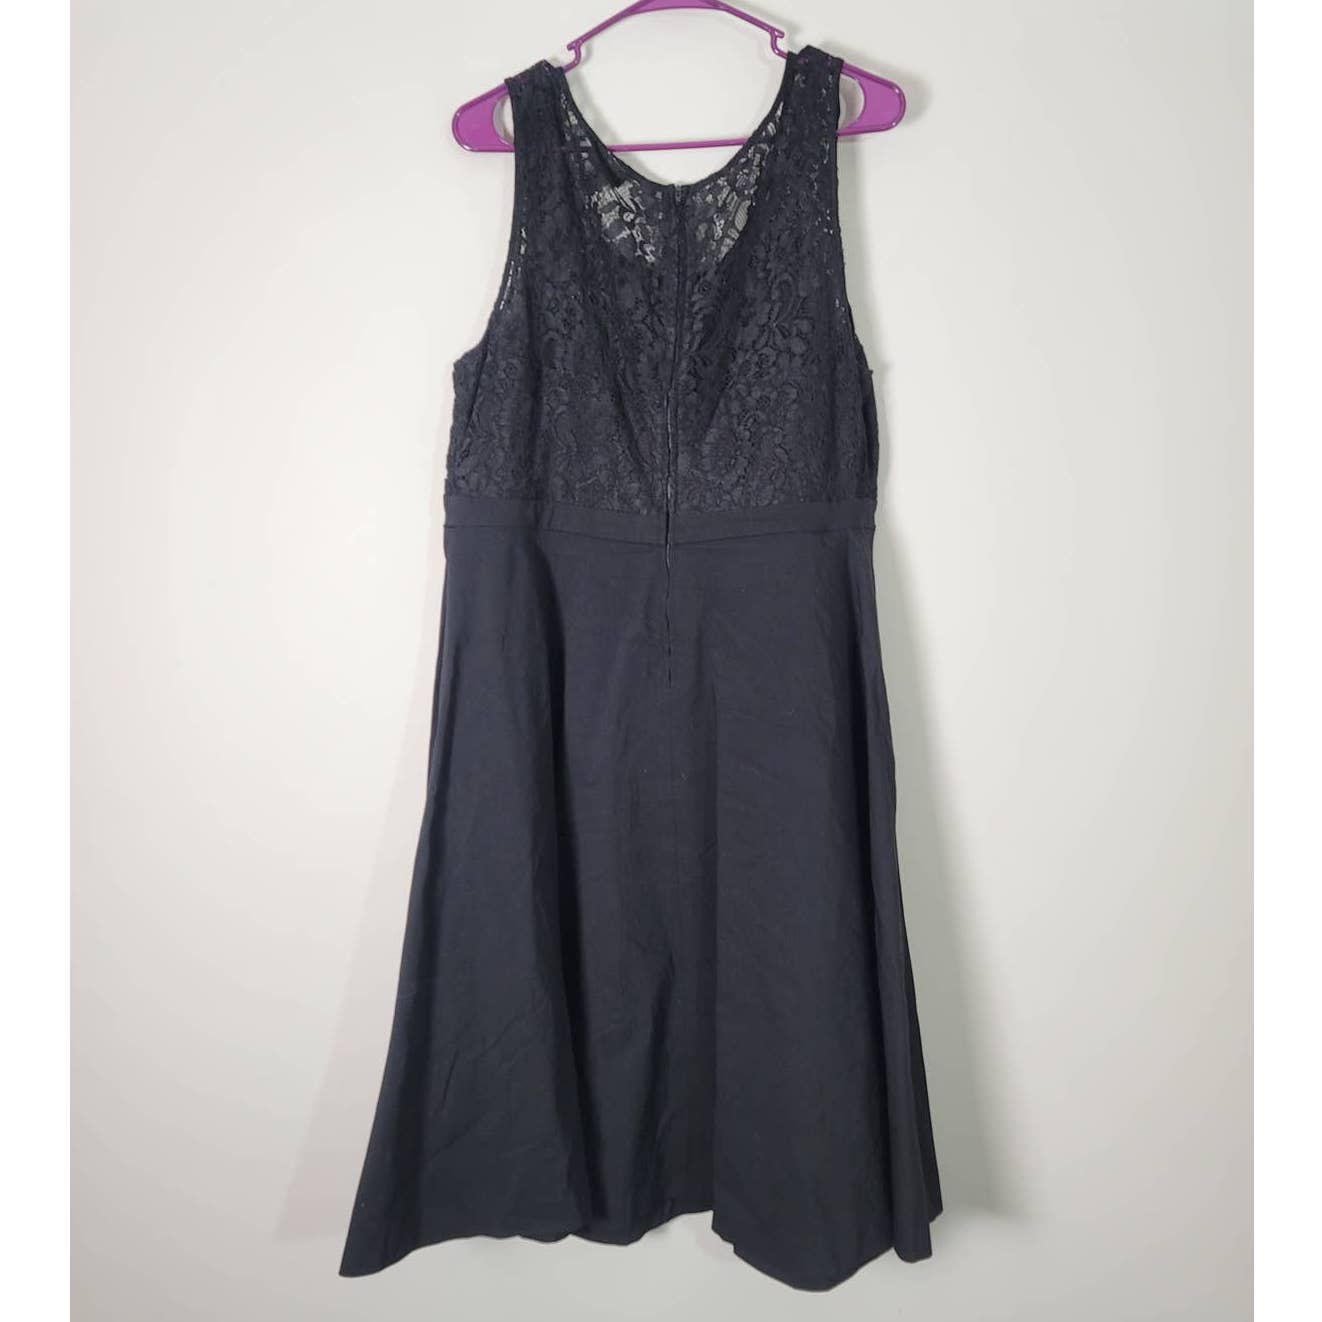 Torrid Midi Dress Black Lace A-Line Back Zip Sleeveless Plus Size 16